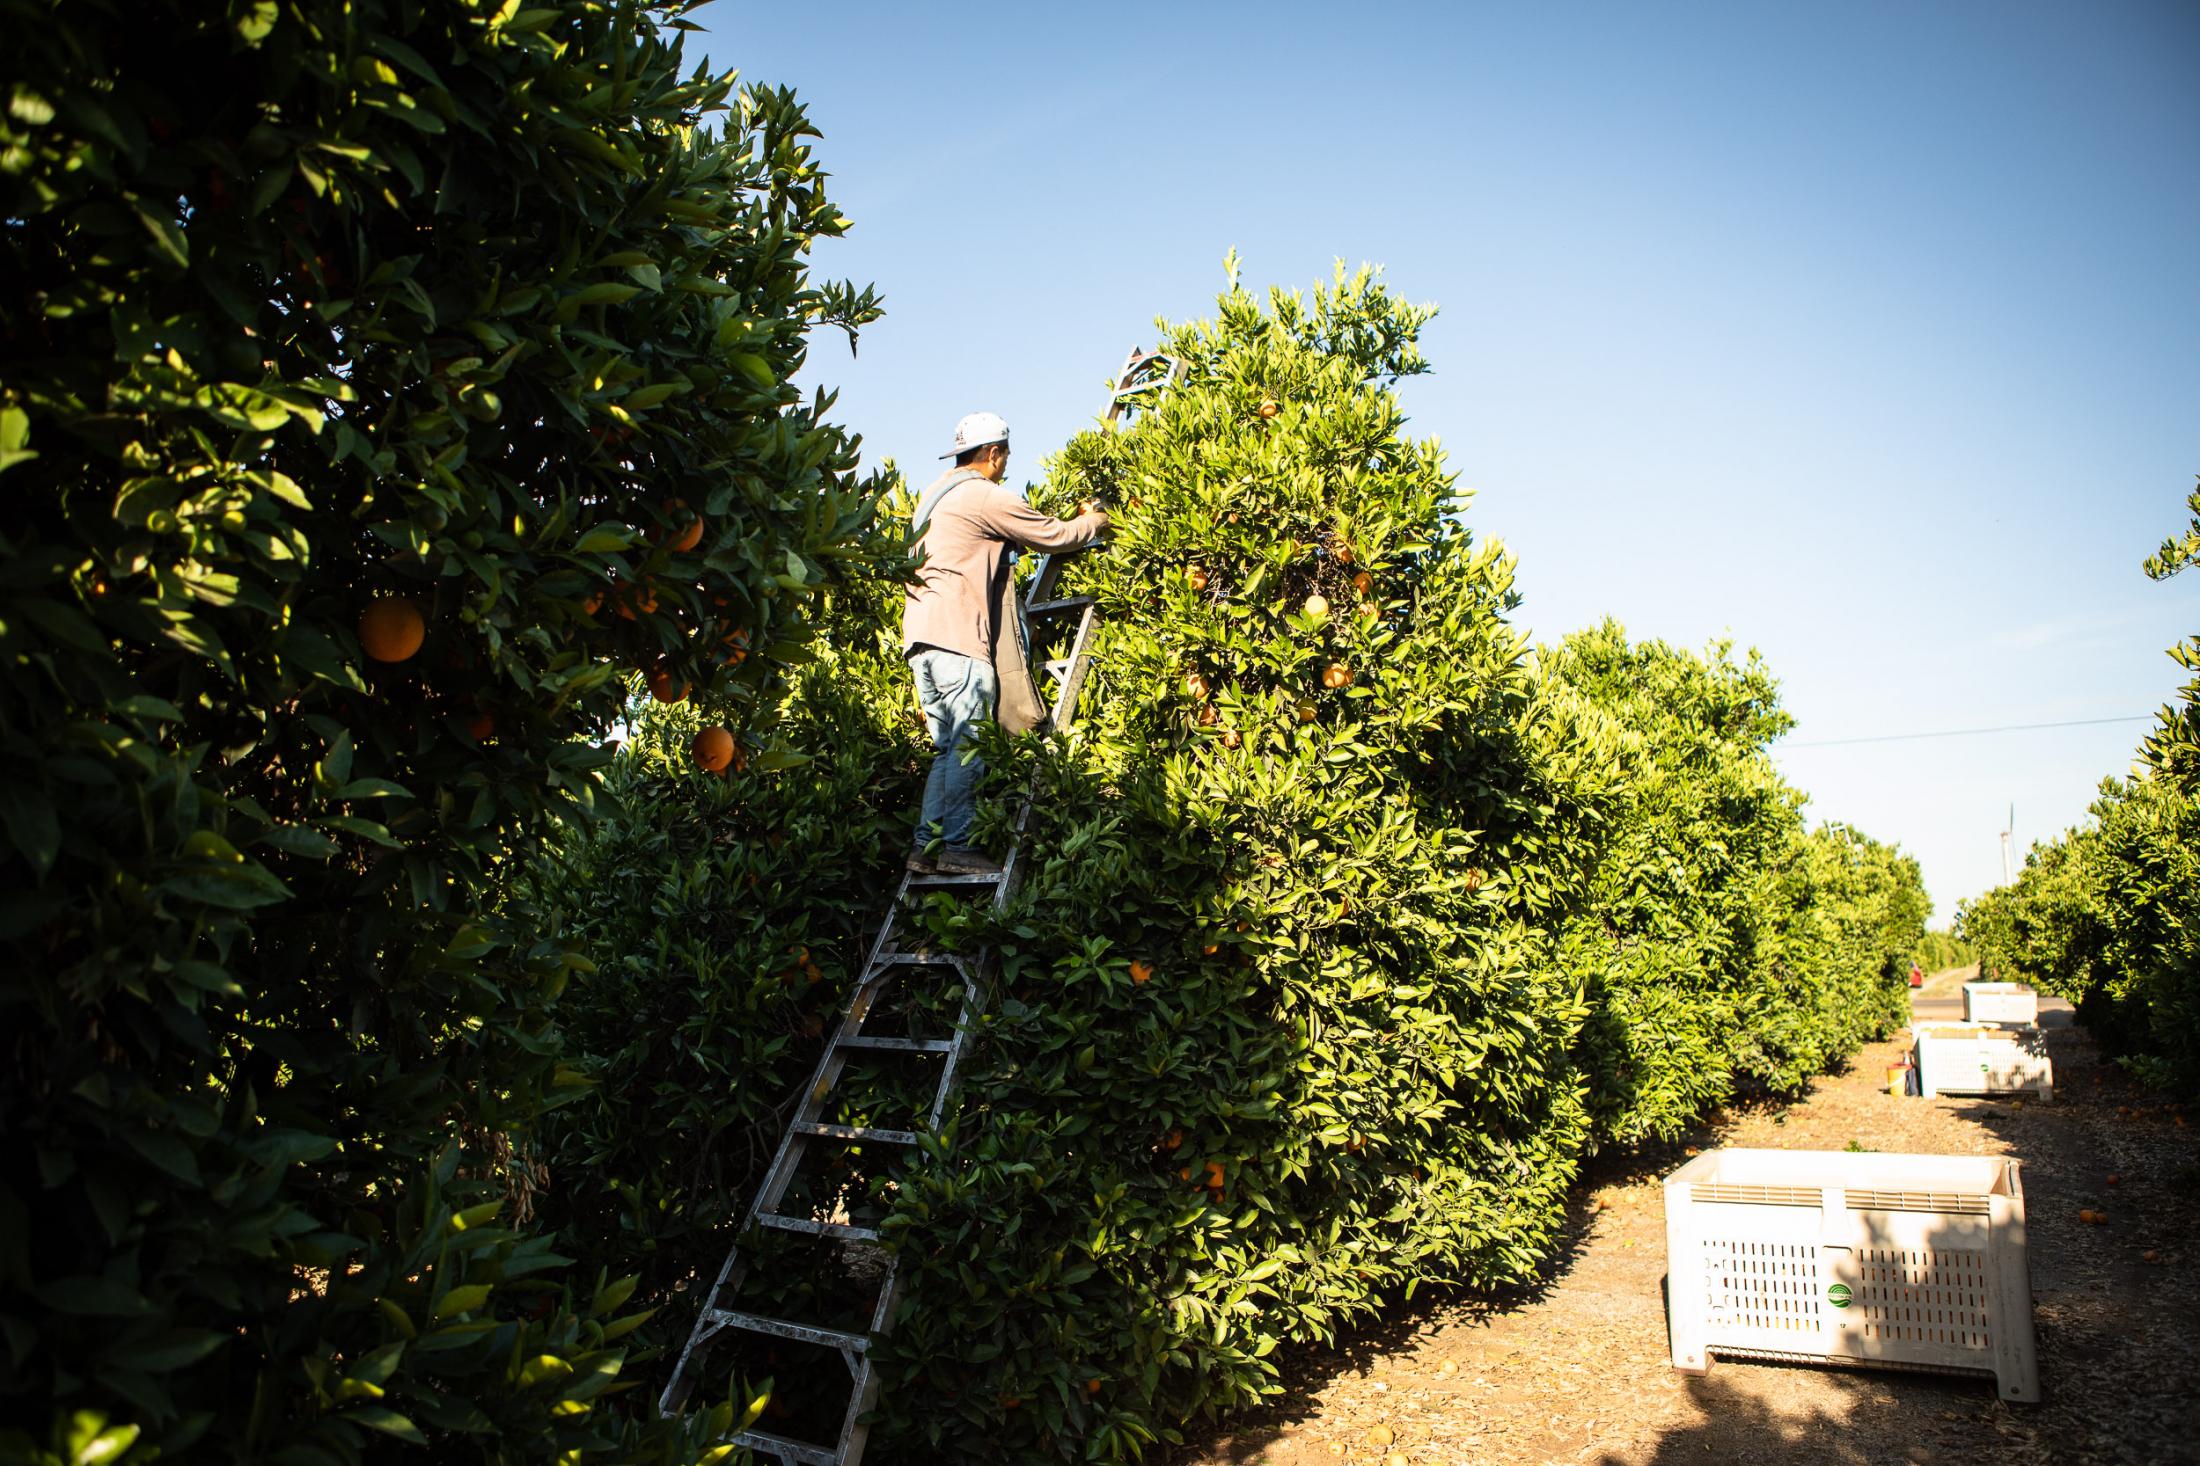  - Pesticides -  Farm workers, picking orange in near by fields. 